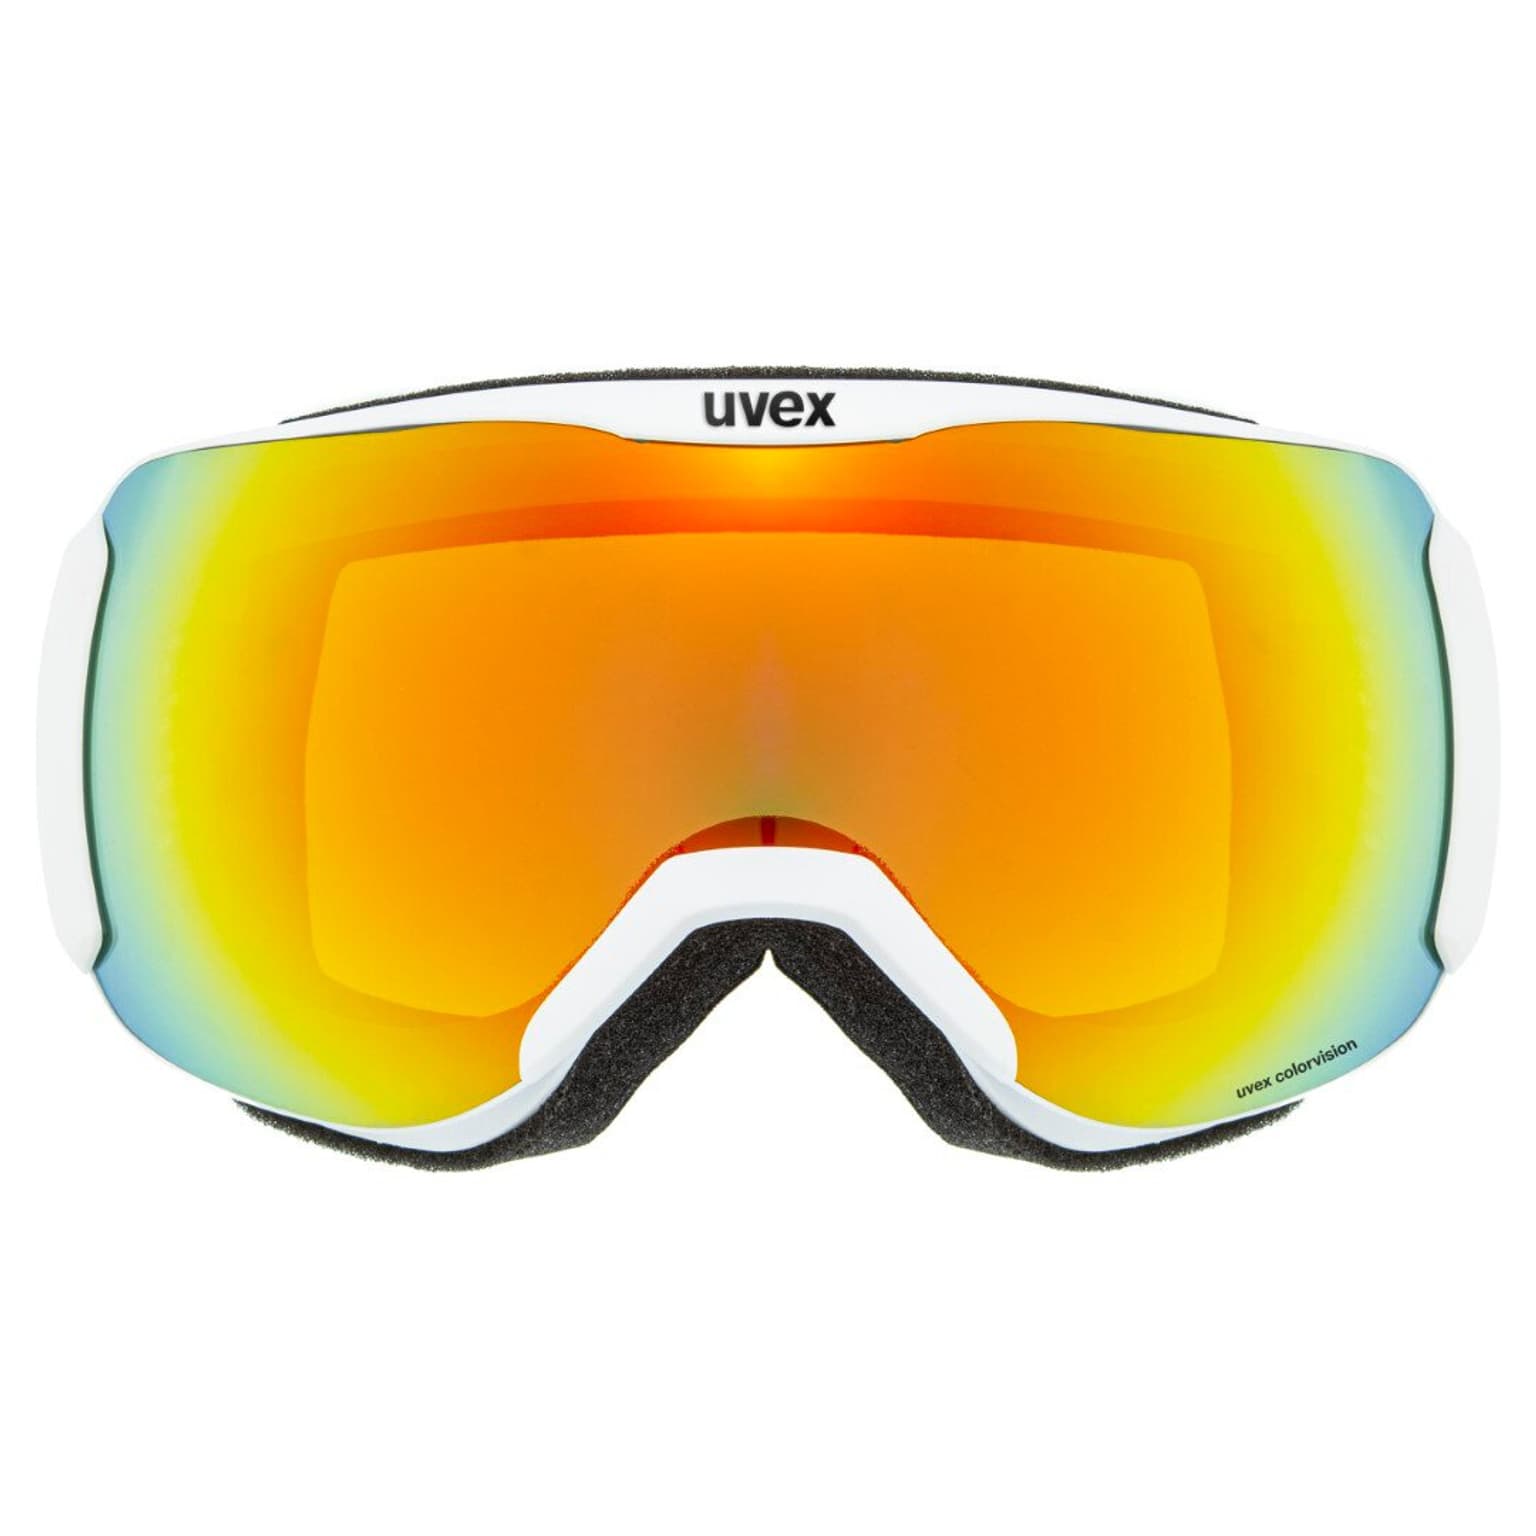 Uvex Uvex Downhill Skibrille giallo-neon 3